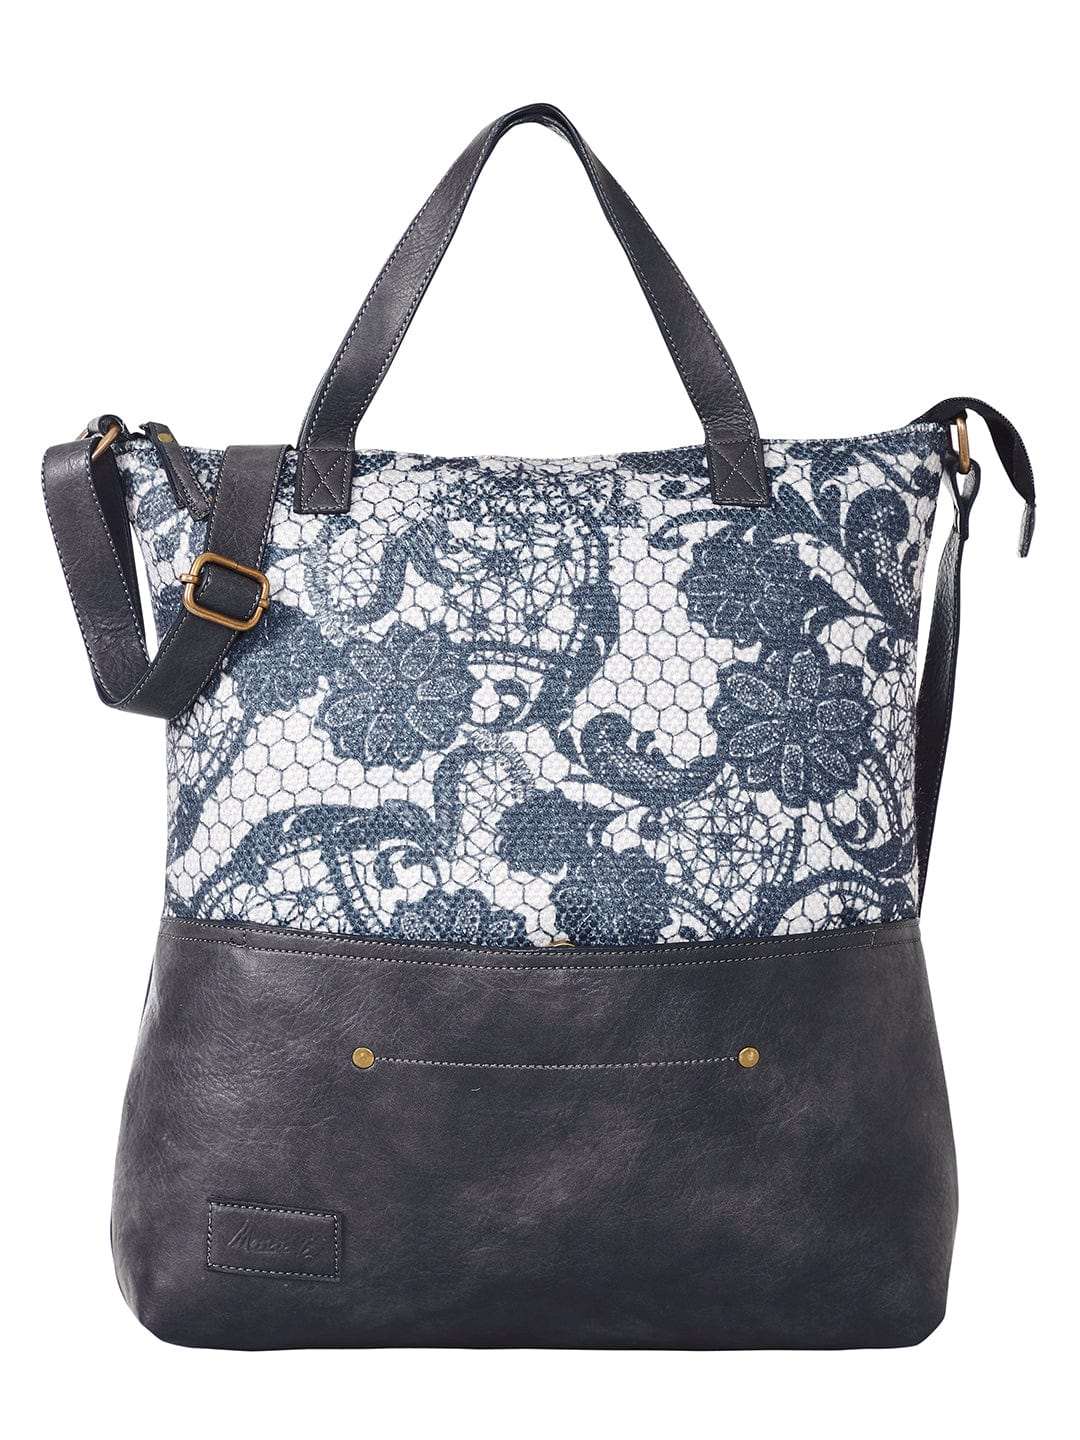 Mona-B Bag Mona B Canvas Large Vintage Handbag, Shoulder Bag, Zipper Tote Bag for Shopping, Travel with Stylish Design For Women (Grey, Kilim) - M-7002